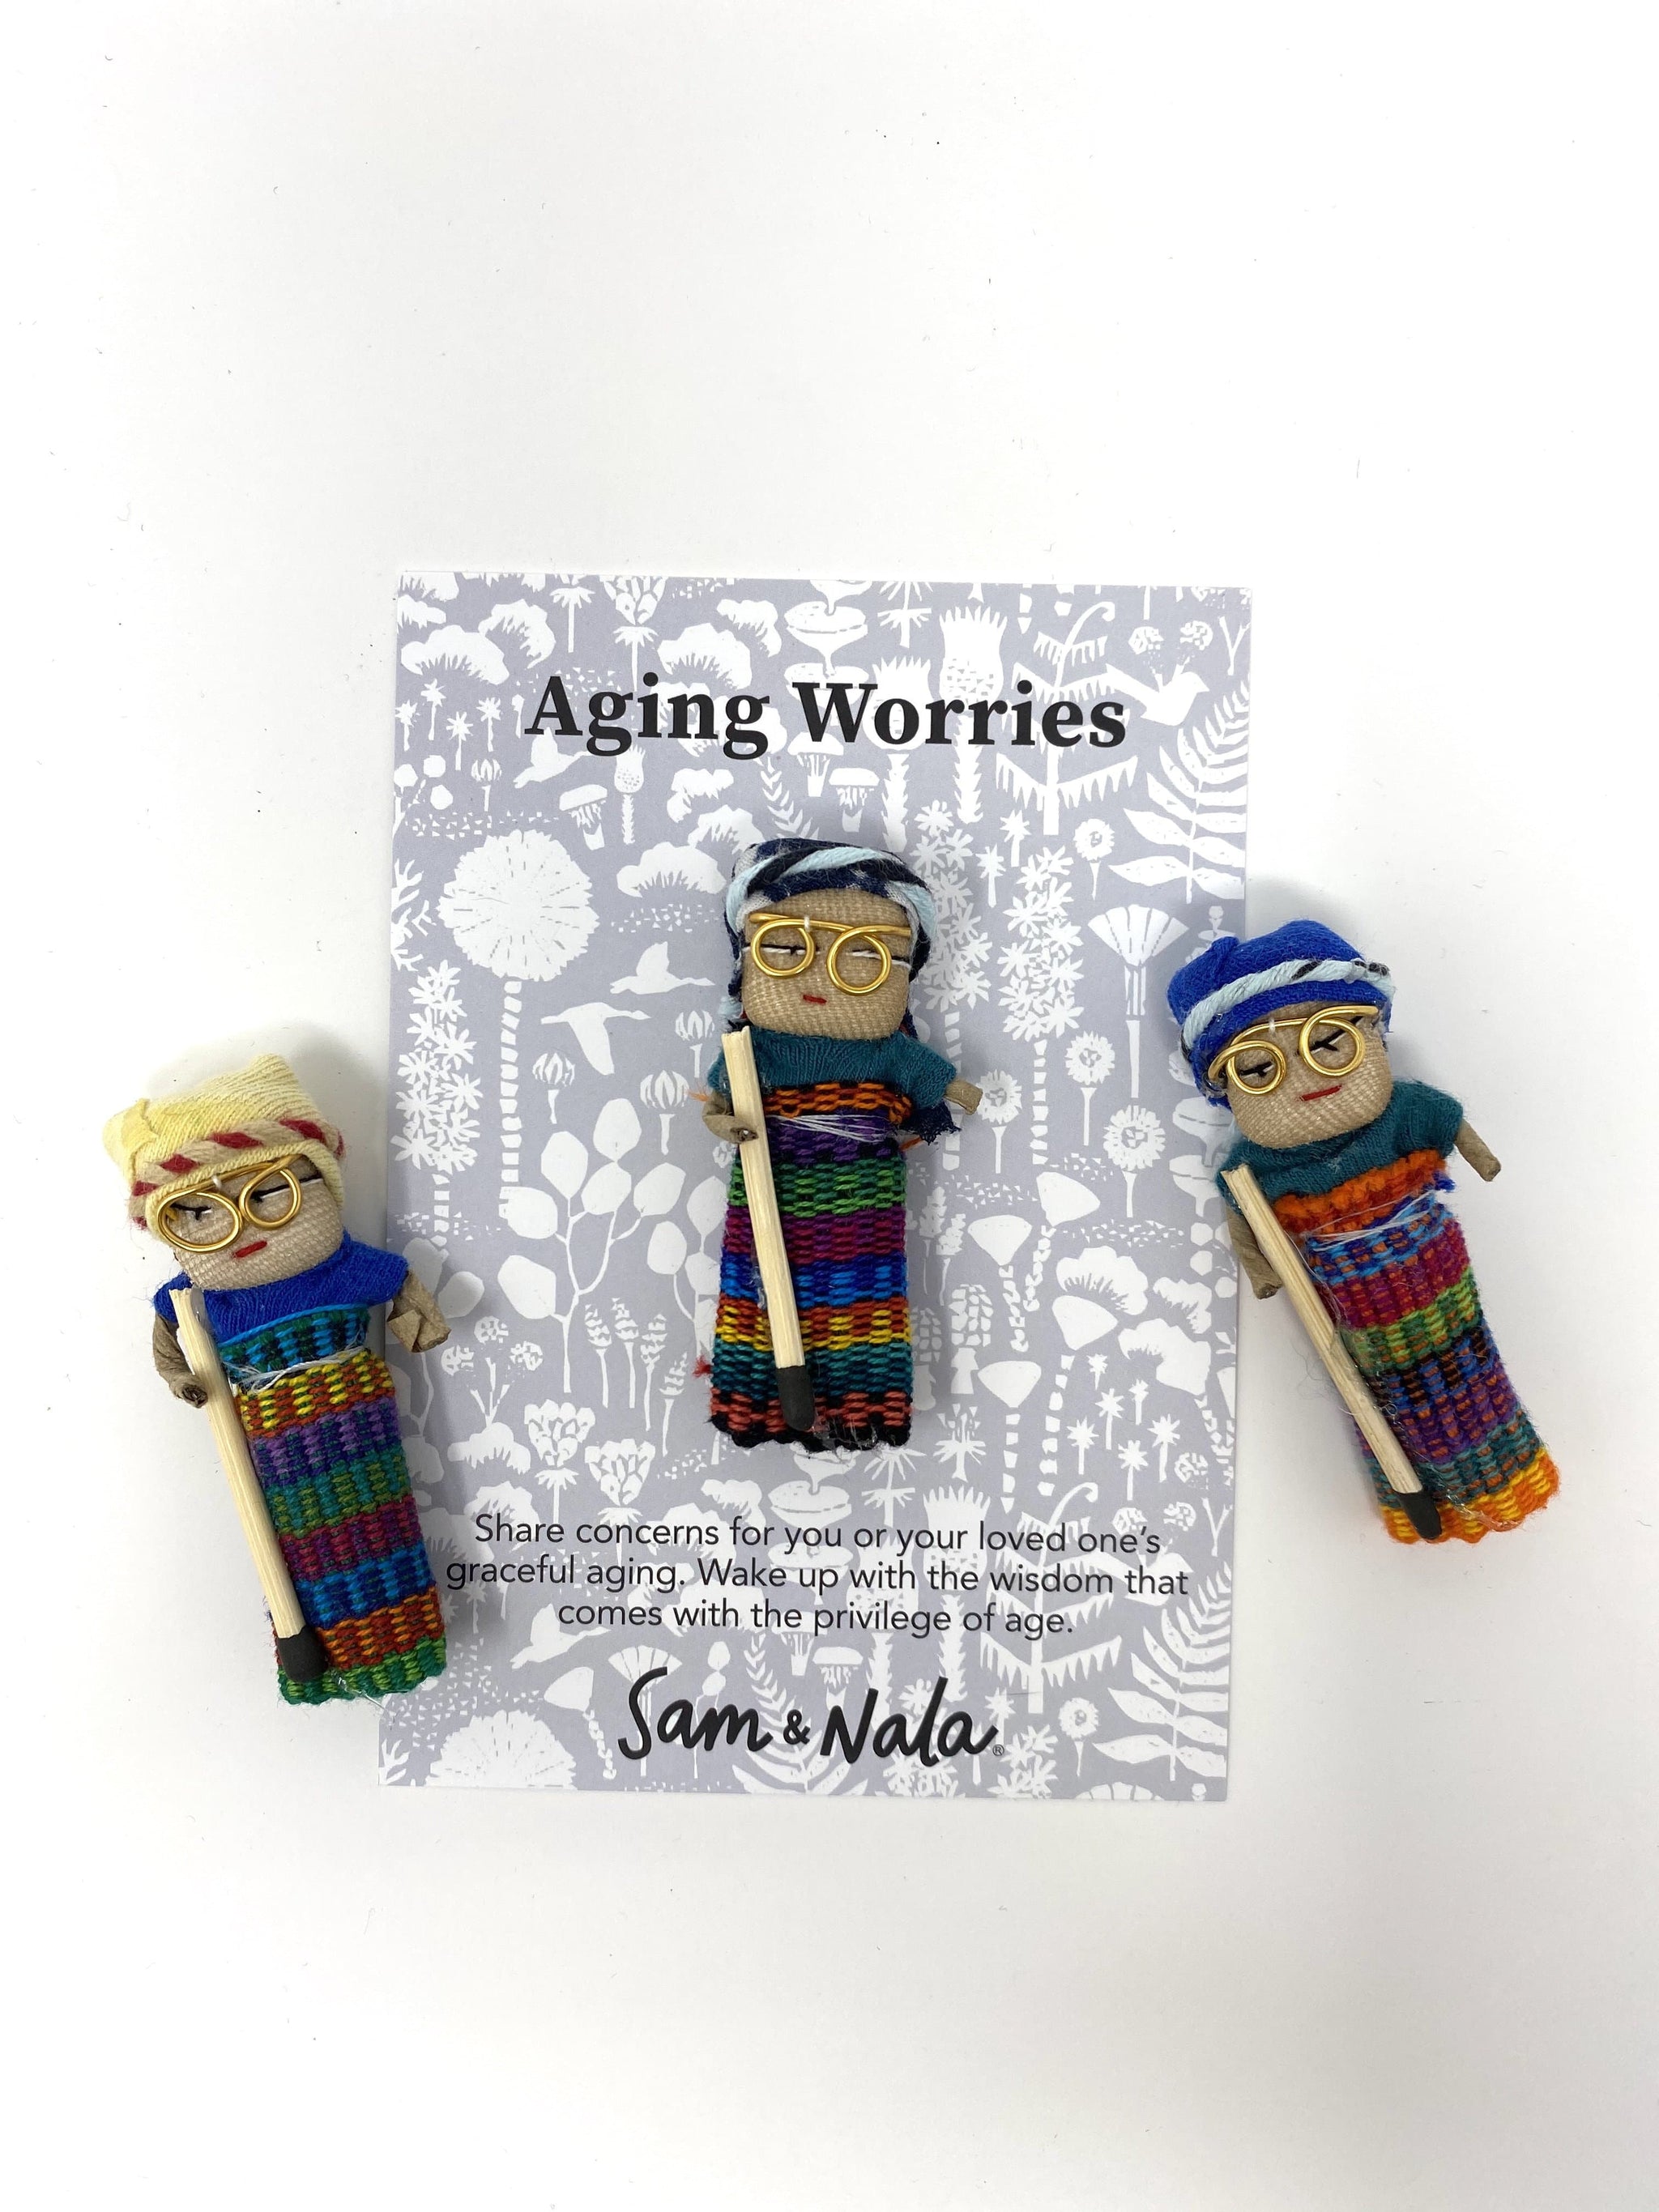 Stellpflug column: Worry dolls are for everyone